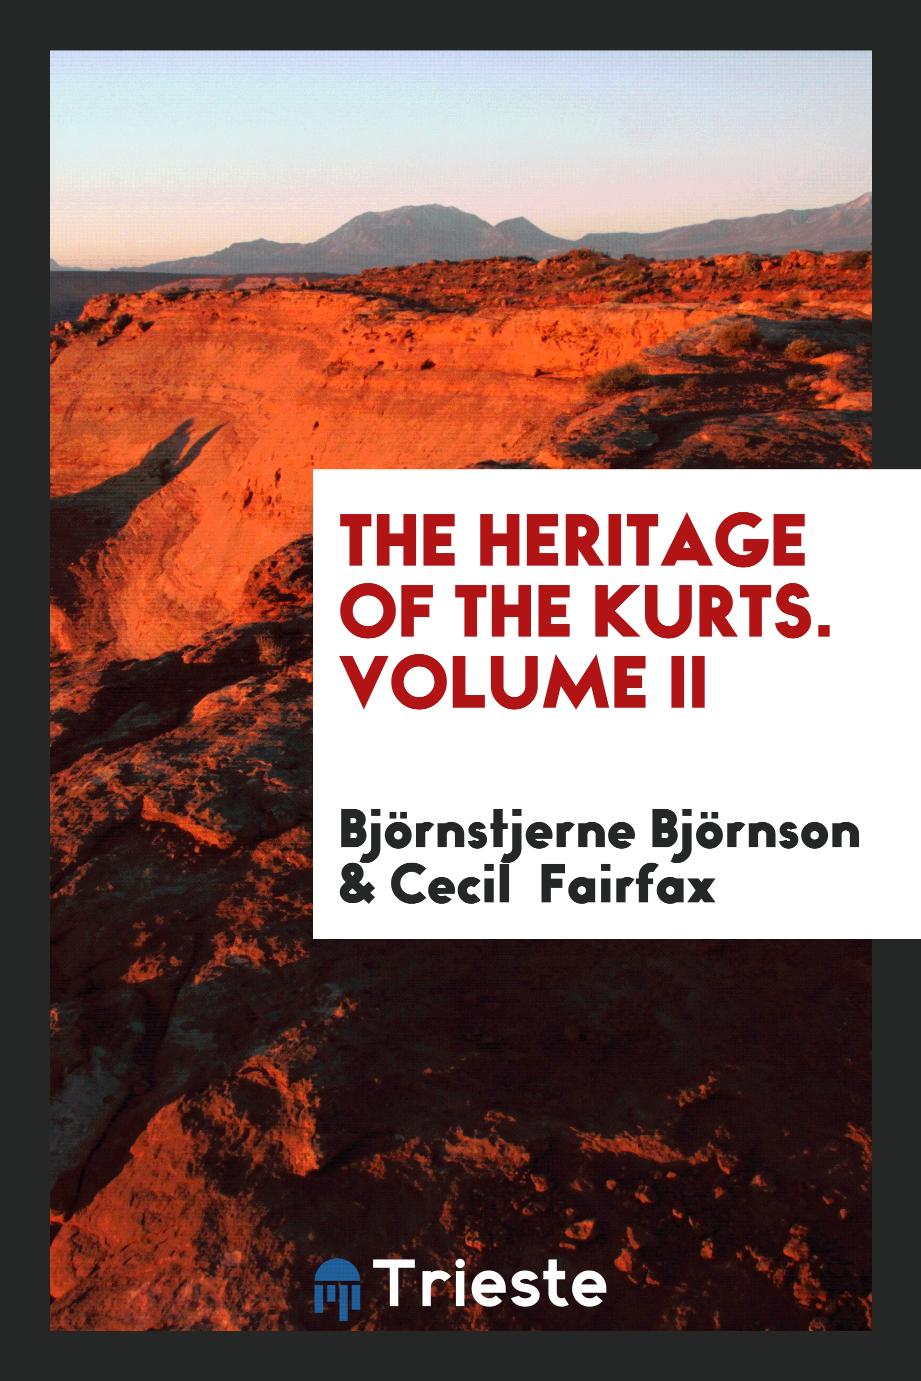 The Heritage of the Kurts. Volume II